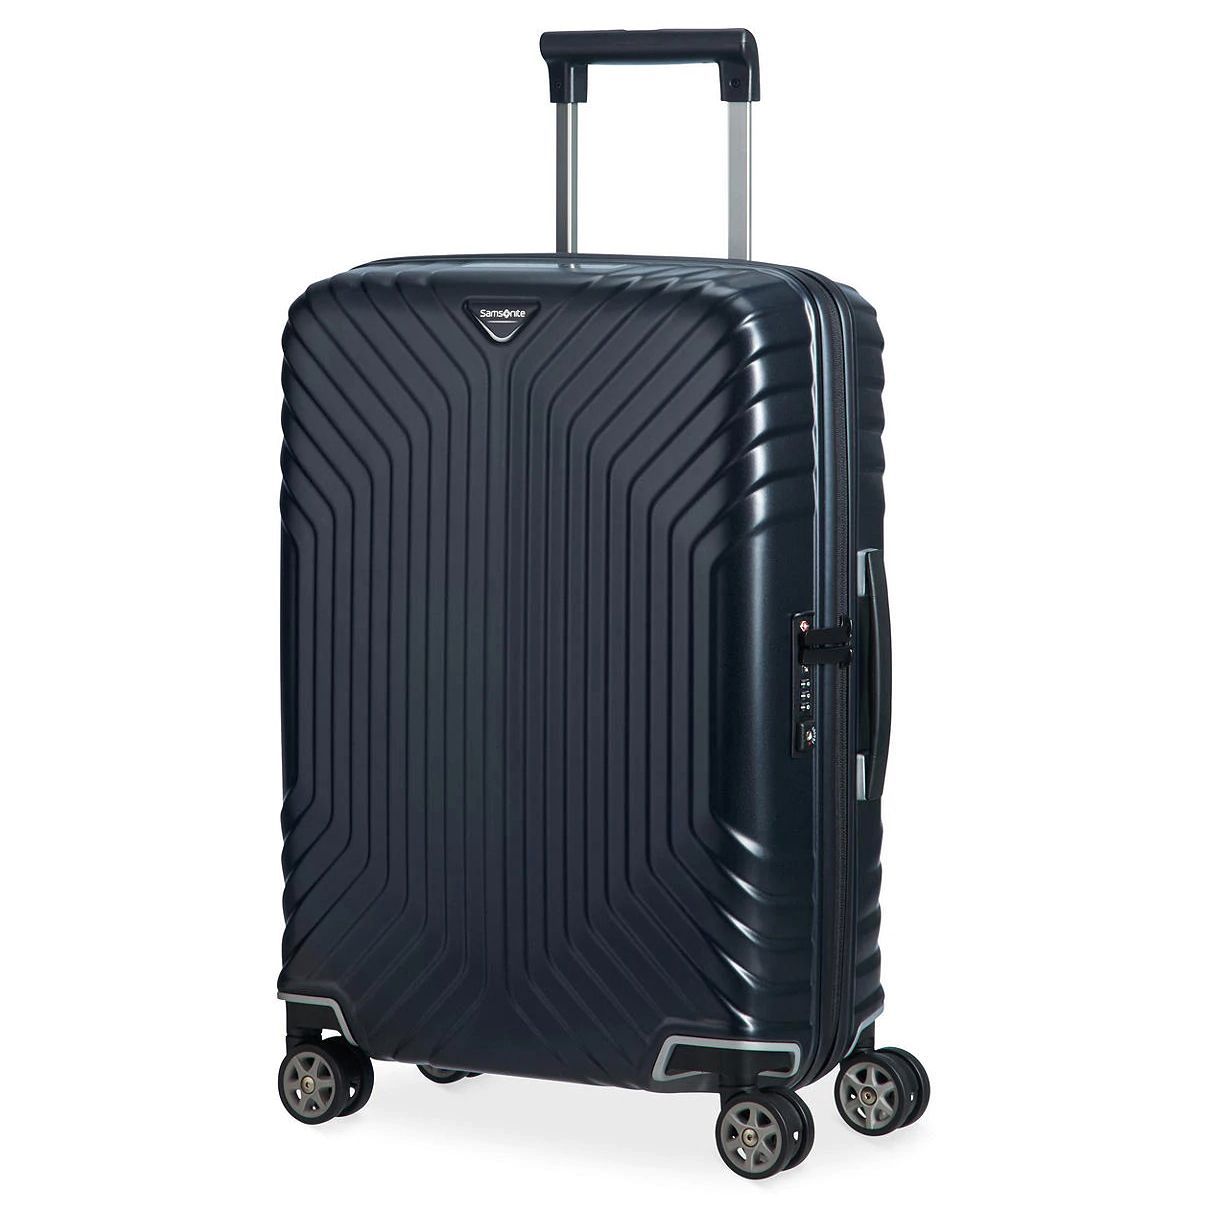 Combination Lock 4 Wheels samsonite large hard shell suitcase